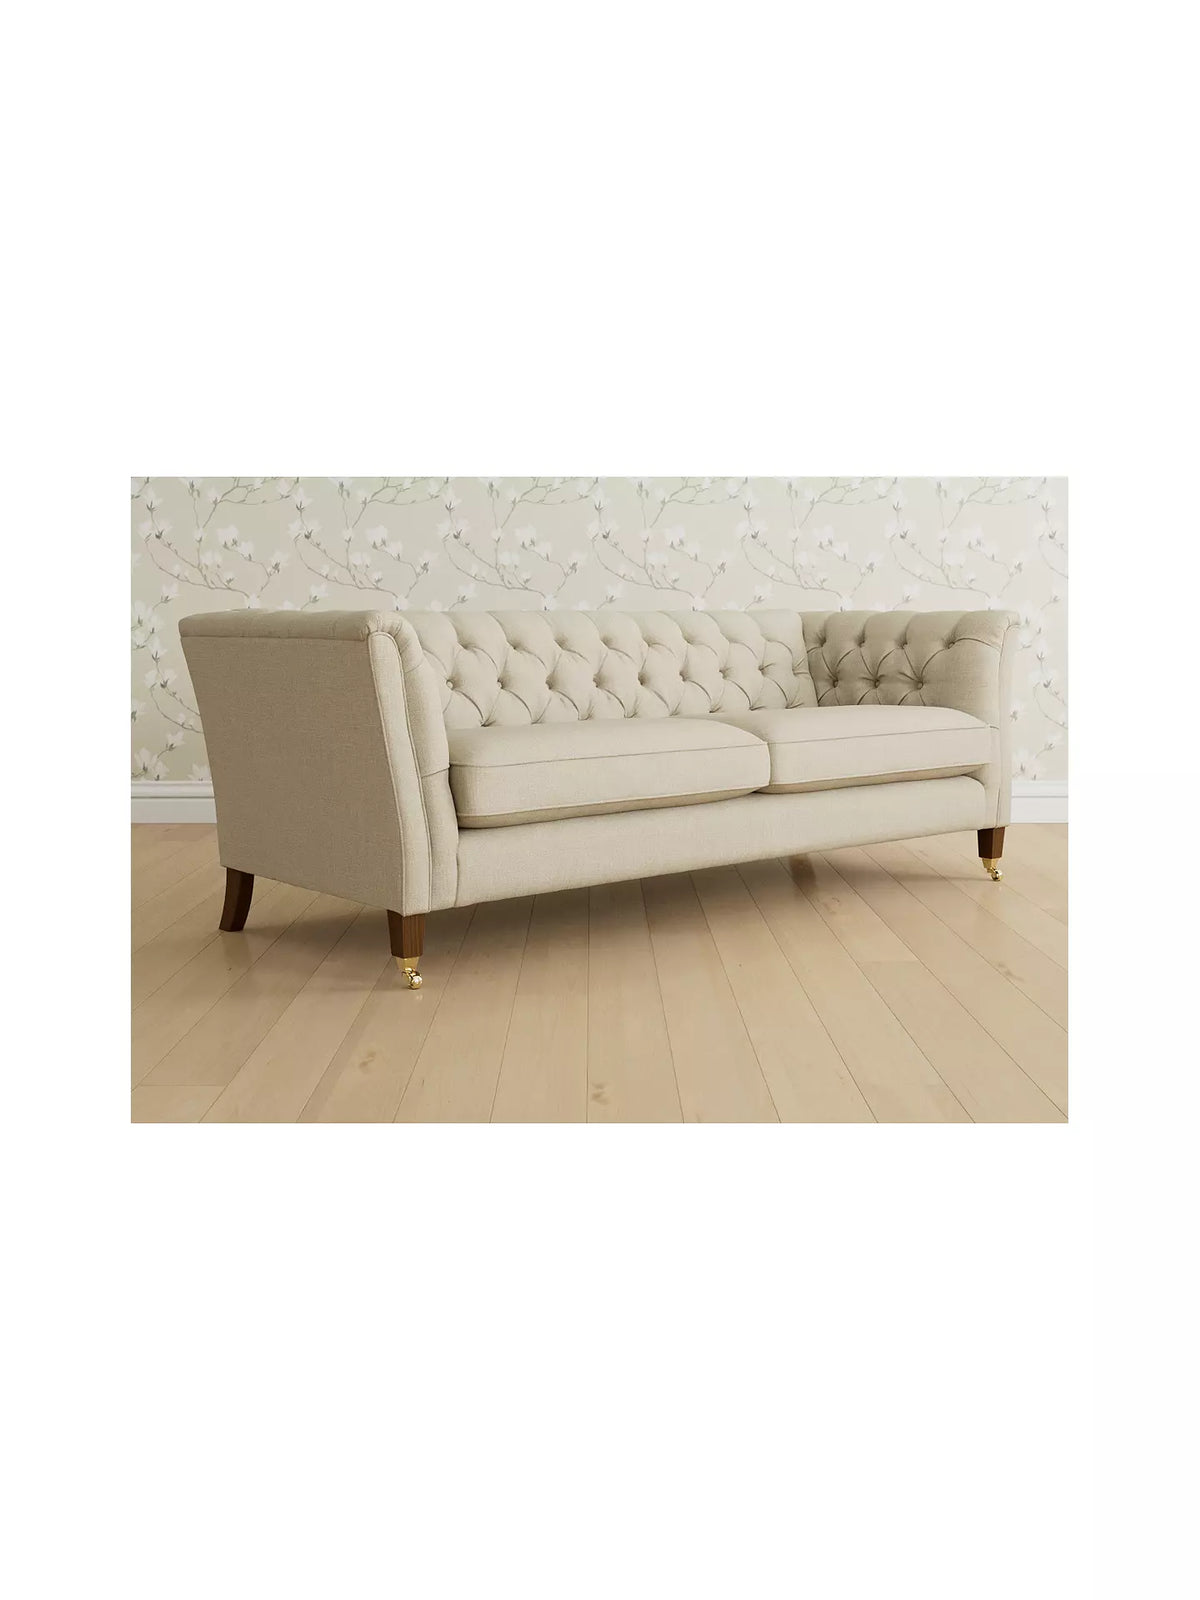 Laura Ashley Chatsworth Grand 4 Seater Sofa, Teak Leg, Wooton Natural